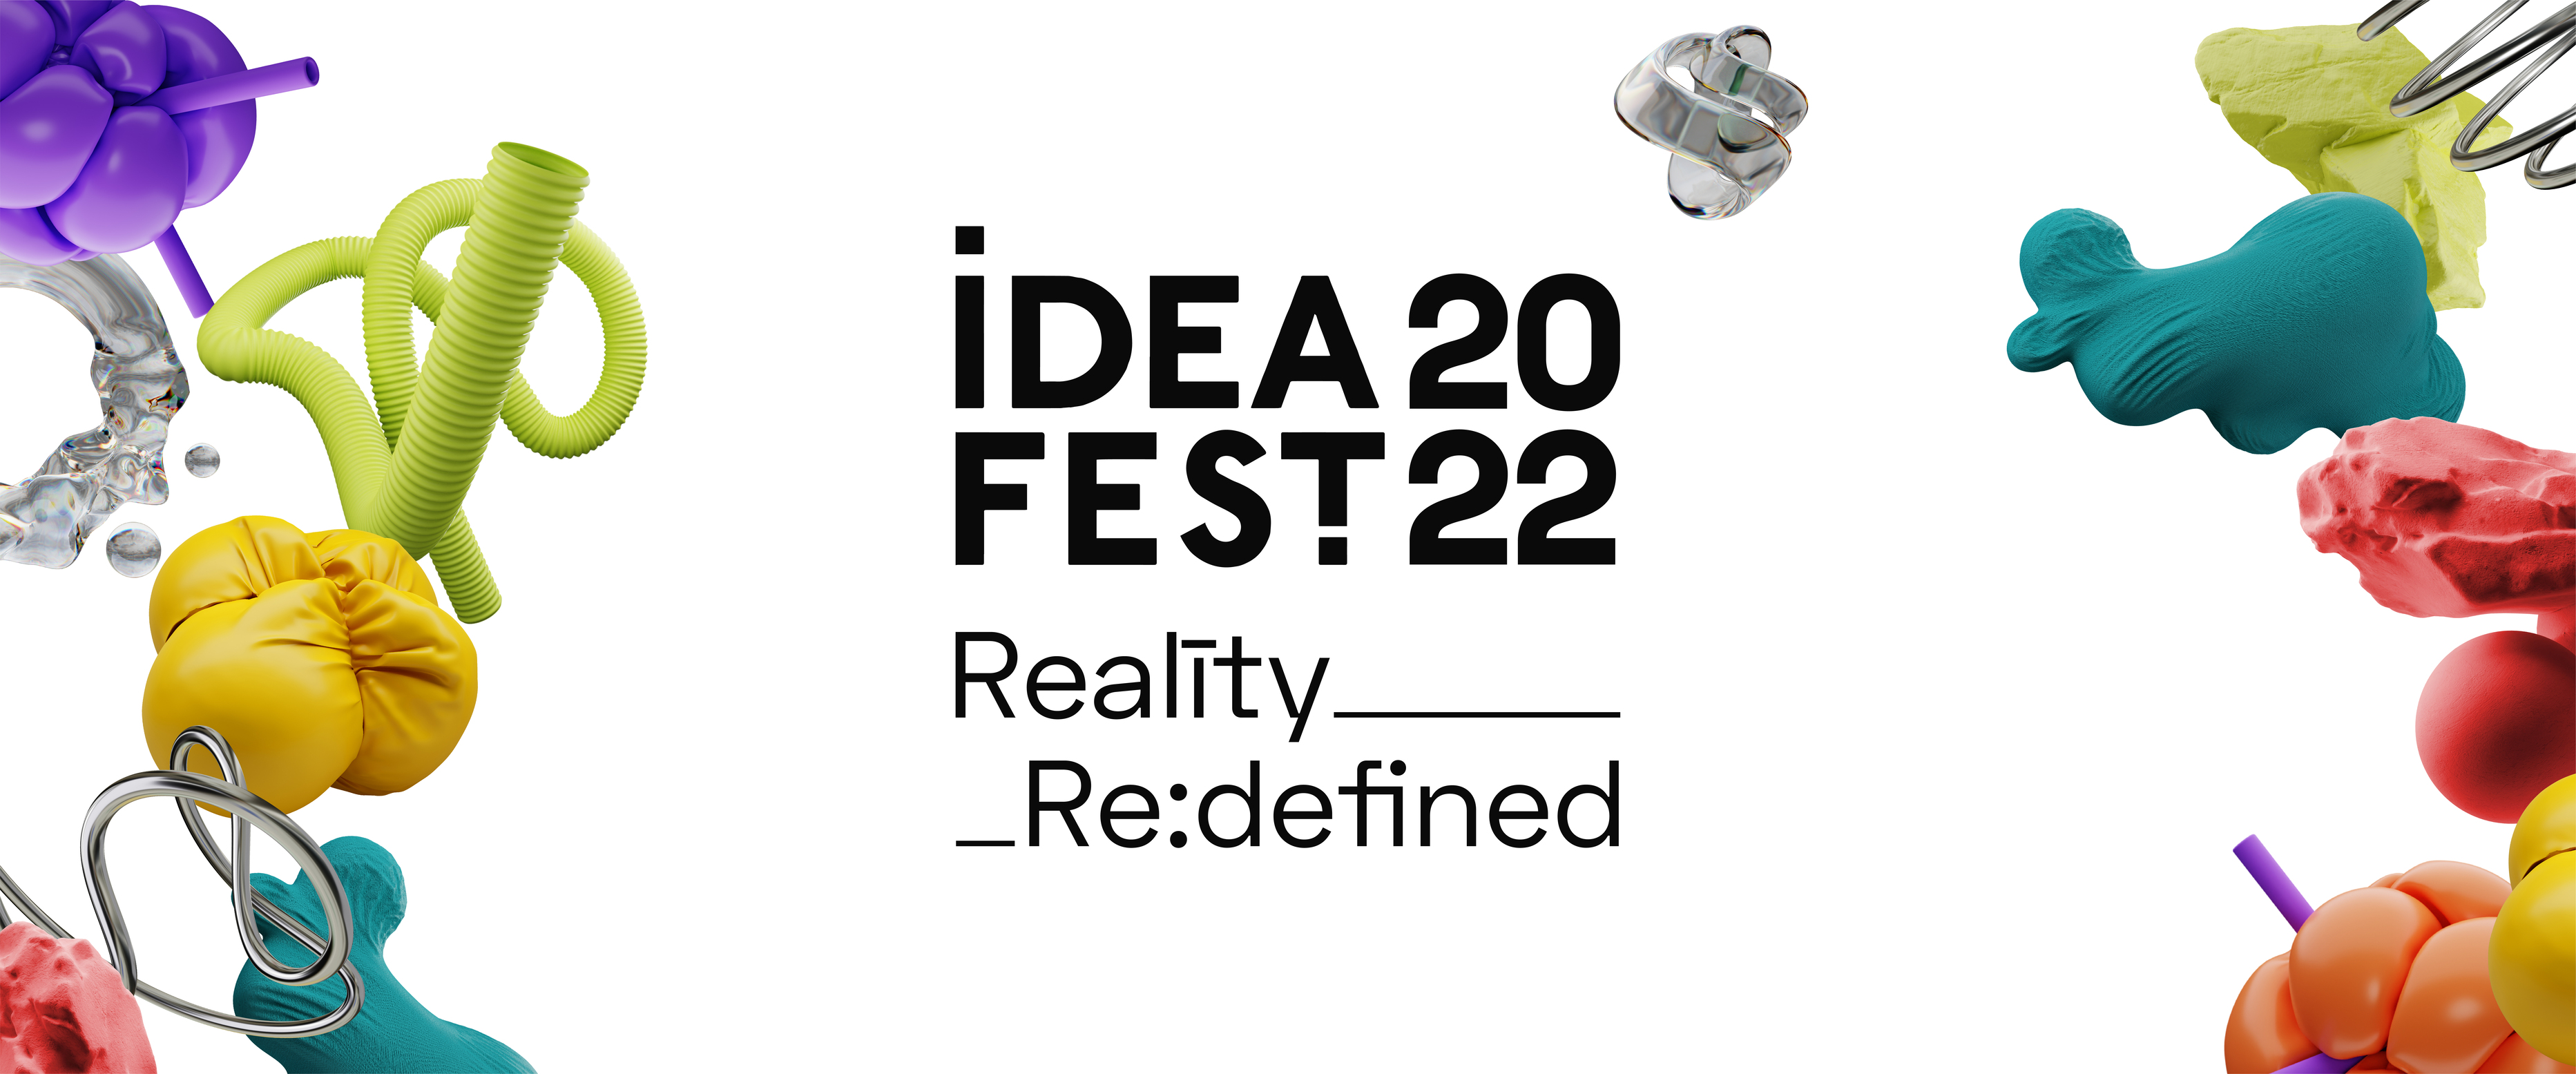 Ideafest